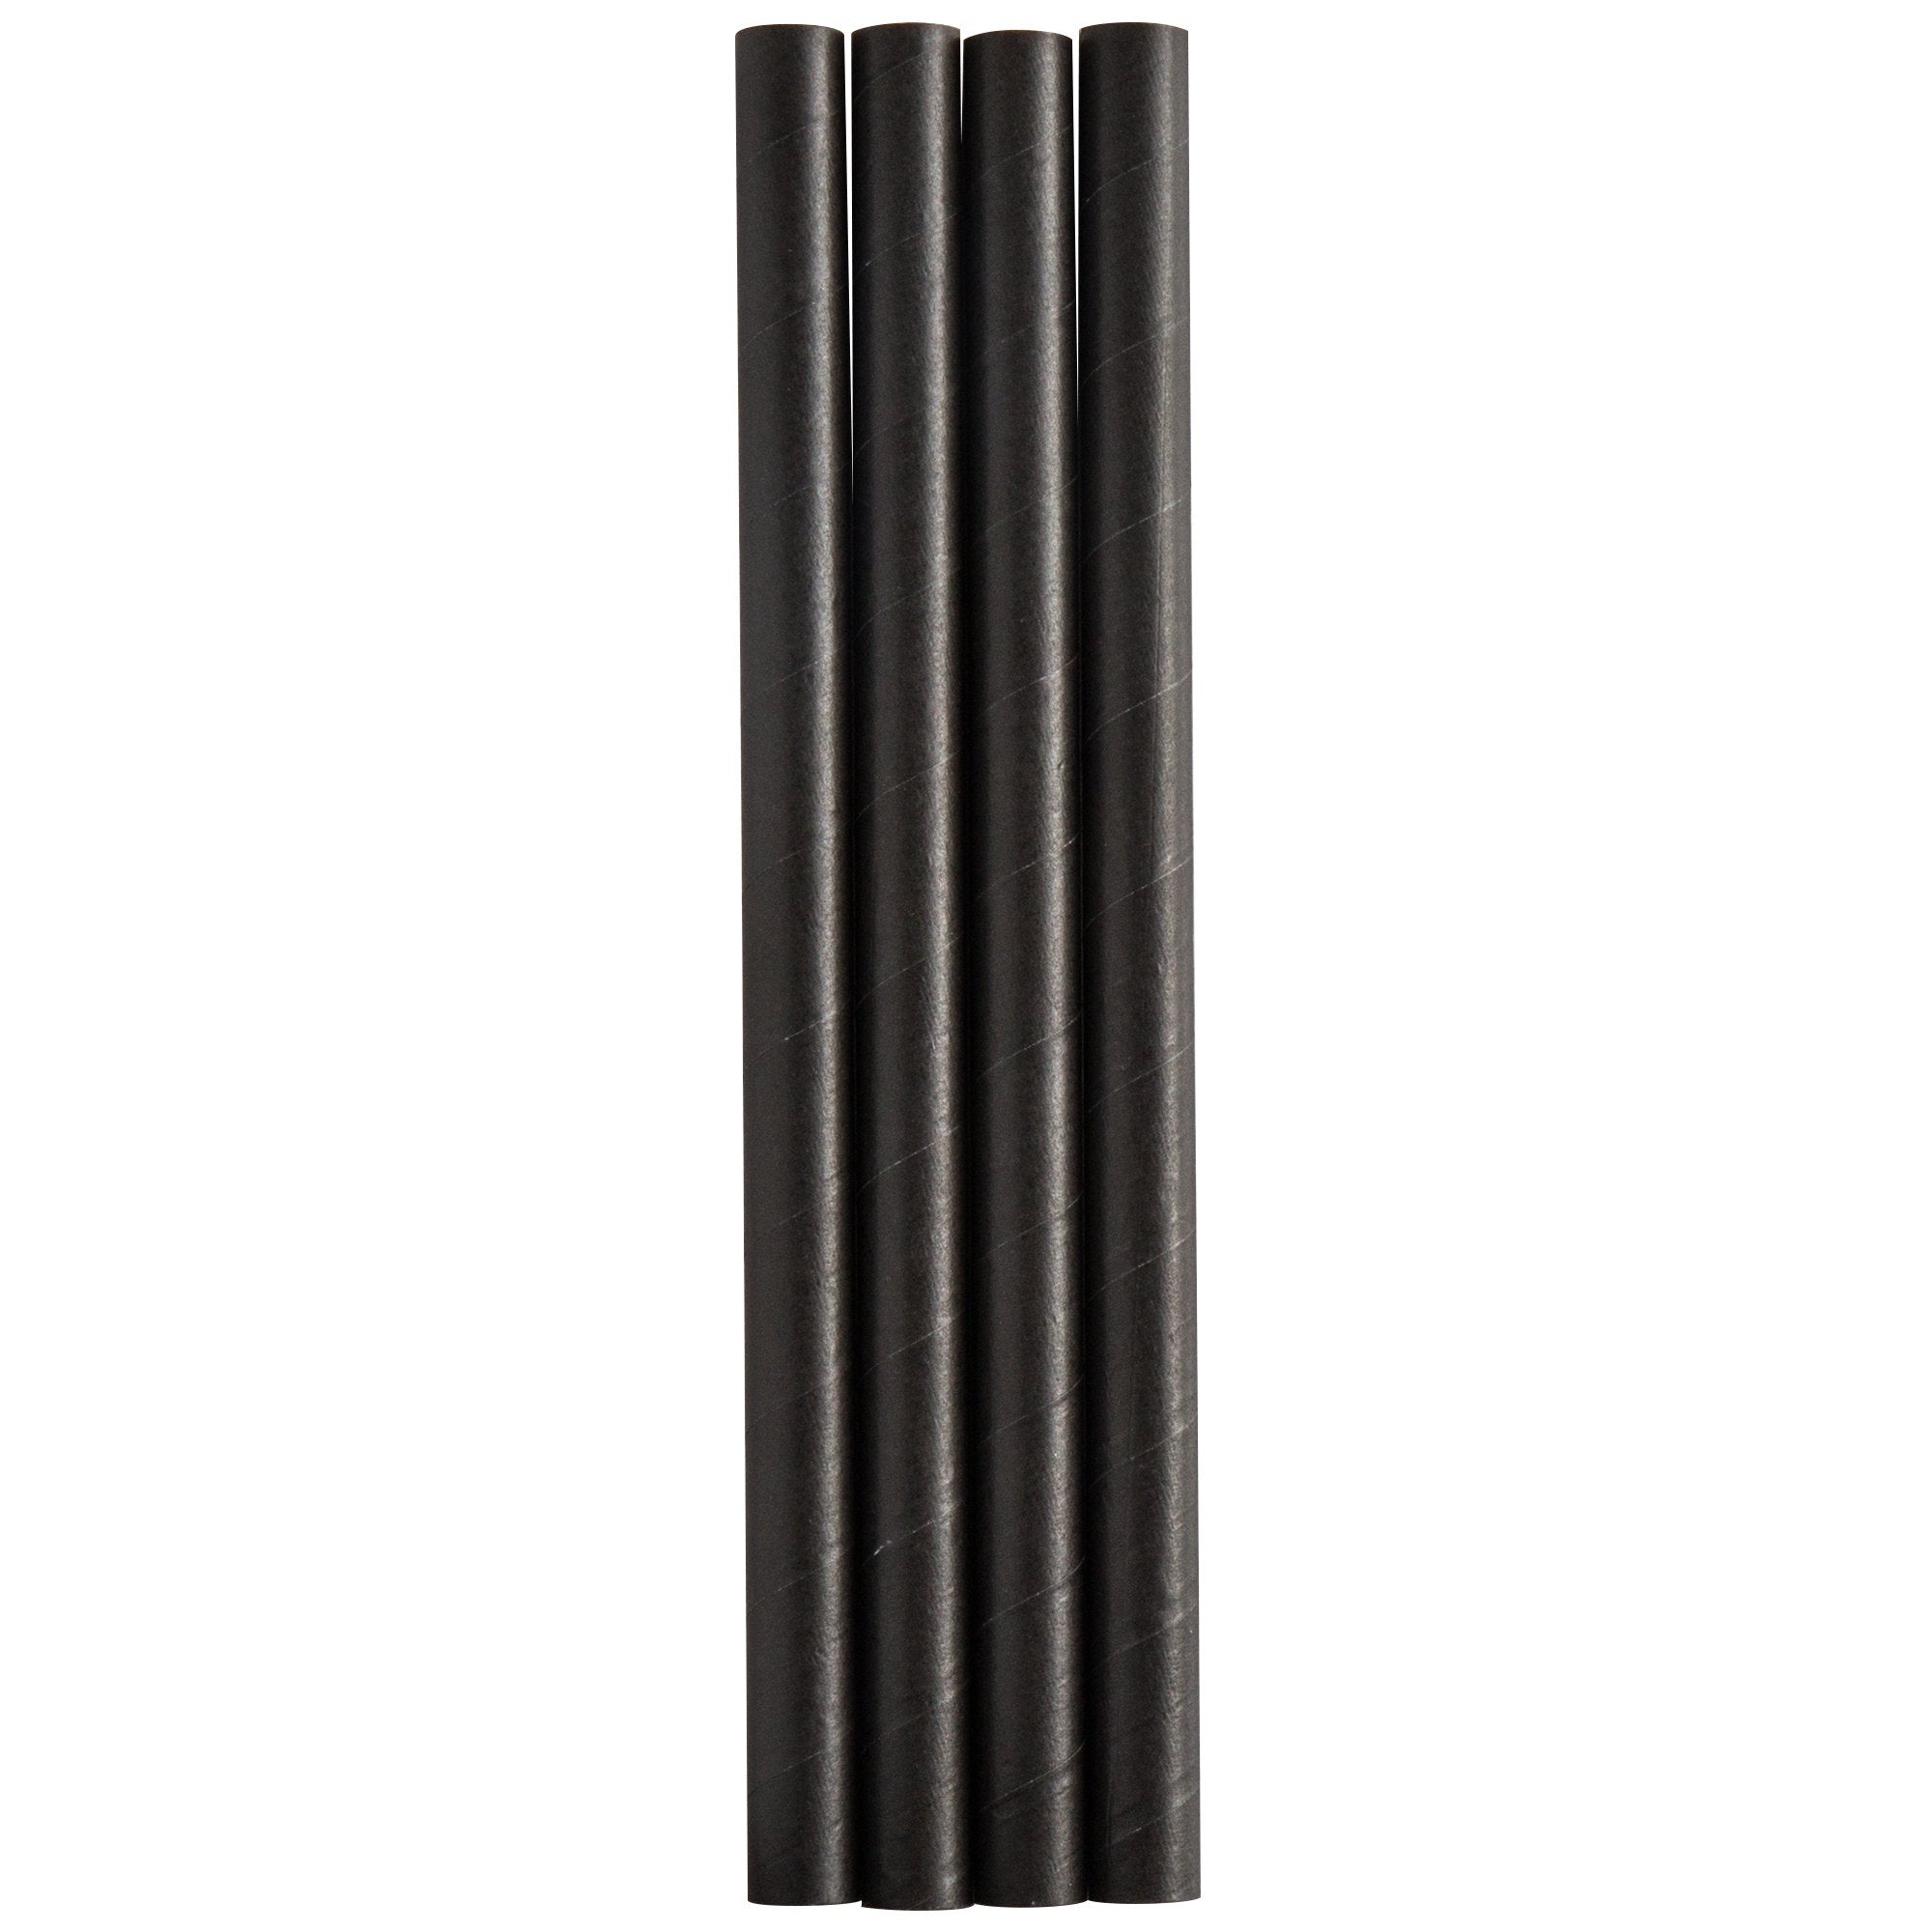 SWZLE Premium Eco-Friendly Paper Drinking Straws (Black - Unwrapped)